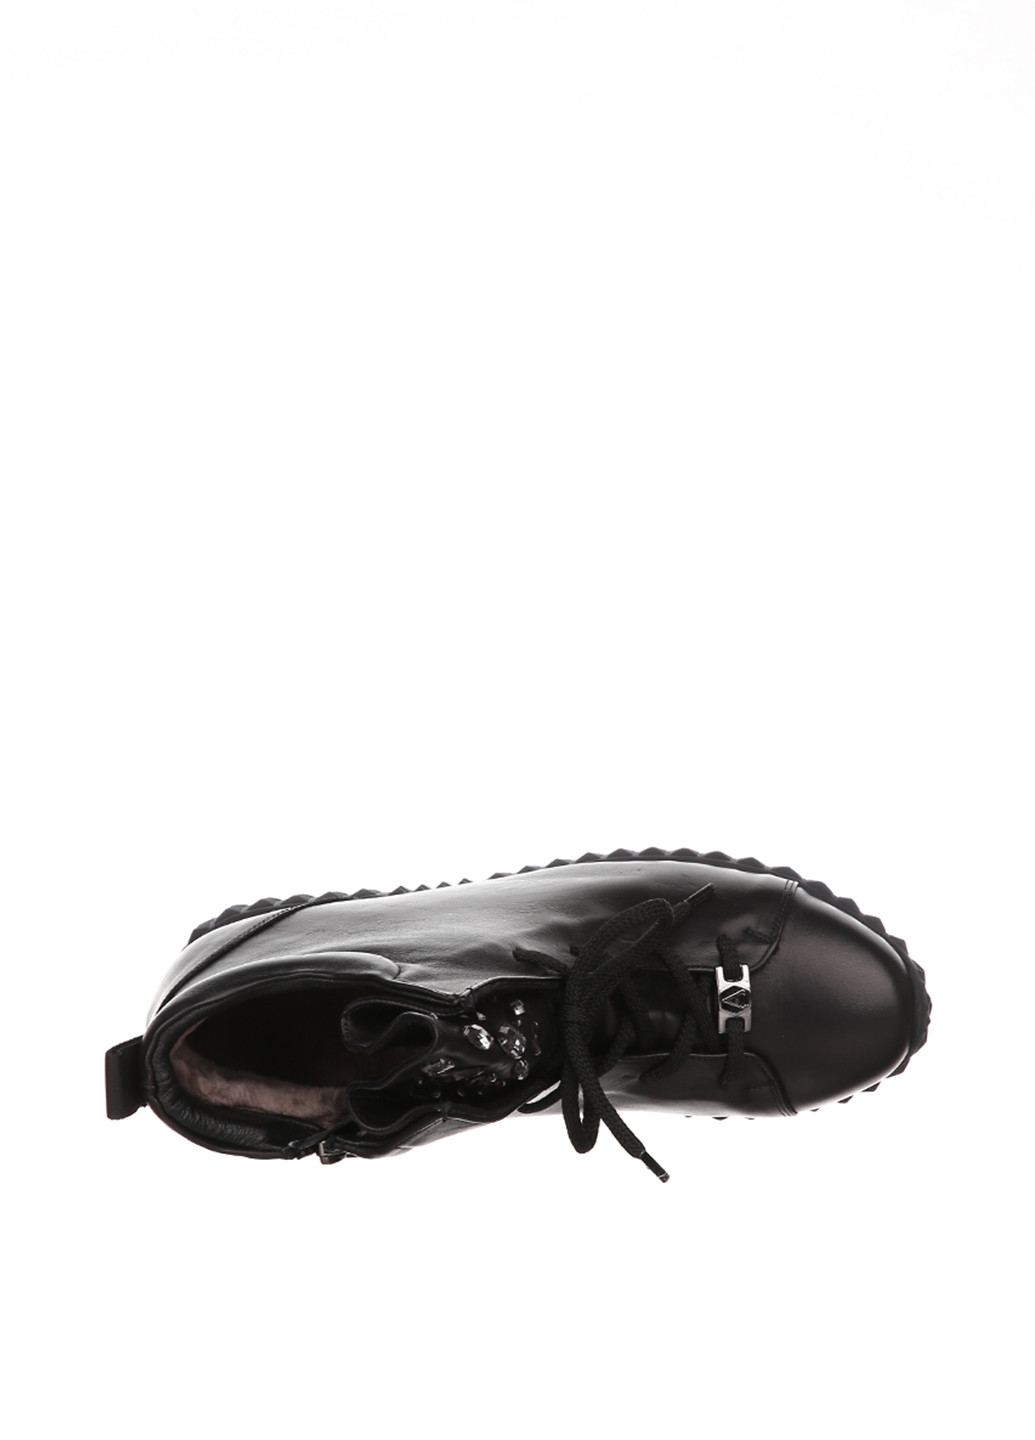 Зимние ботинки Alpino со шнуровкой